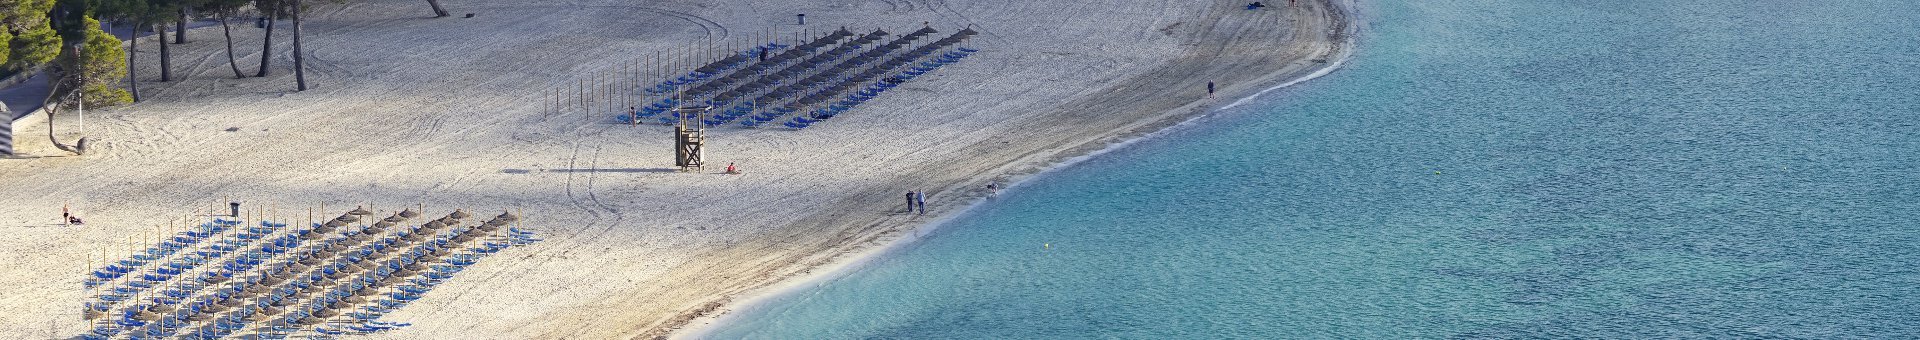 Playa de Santa Ponsa